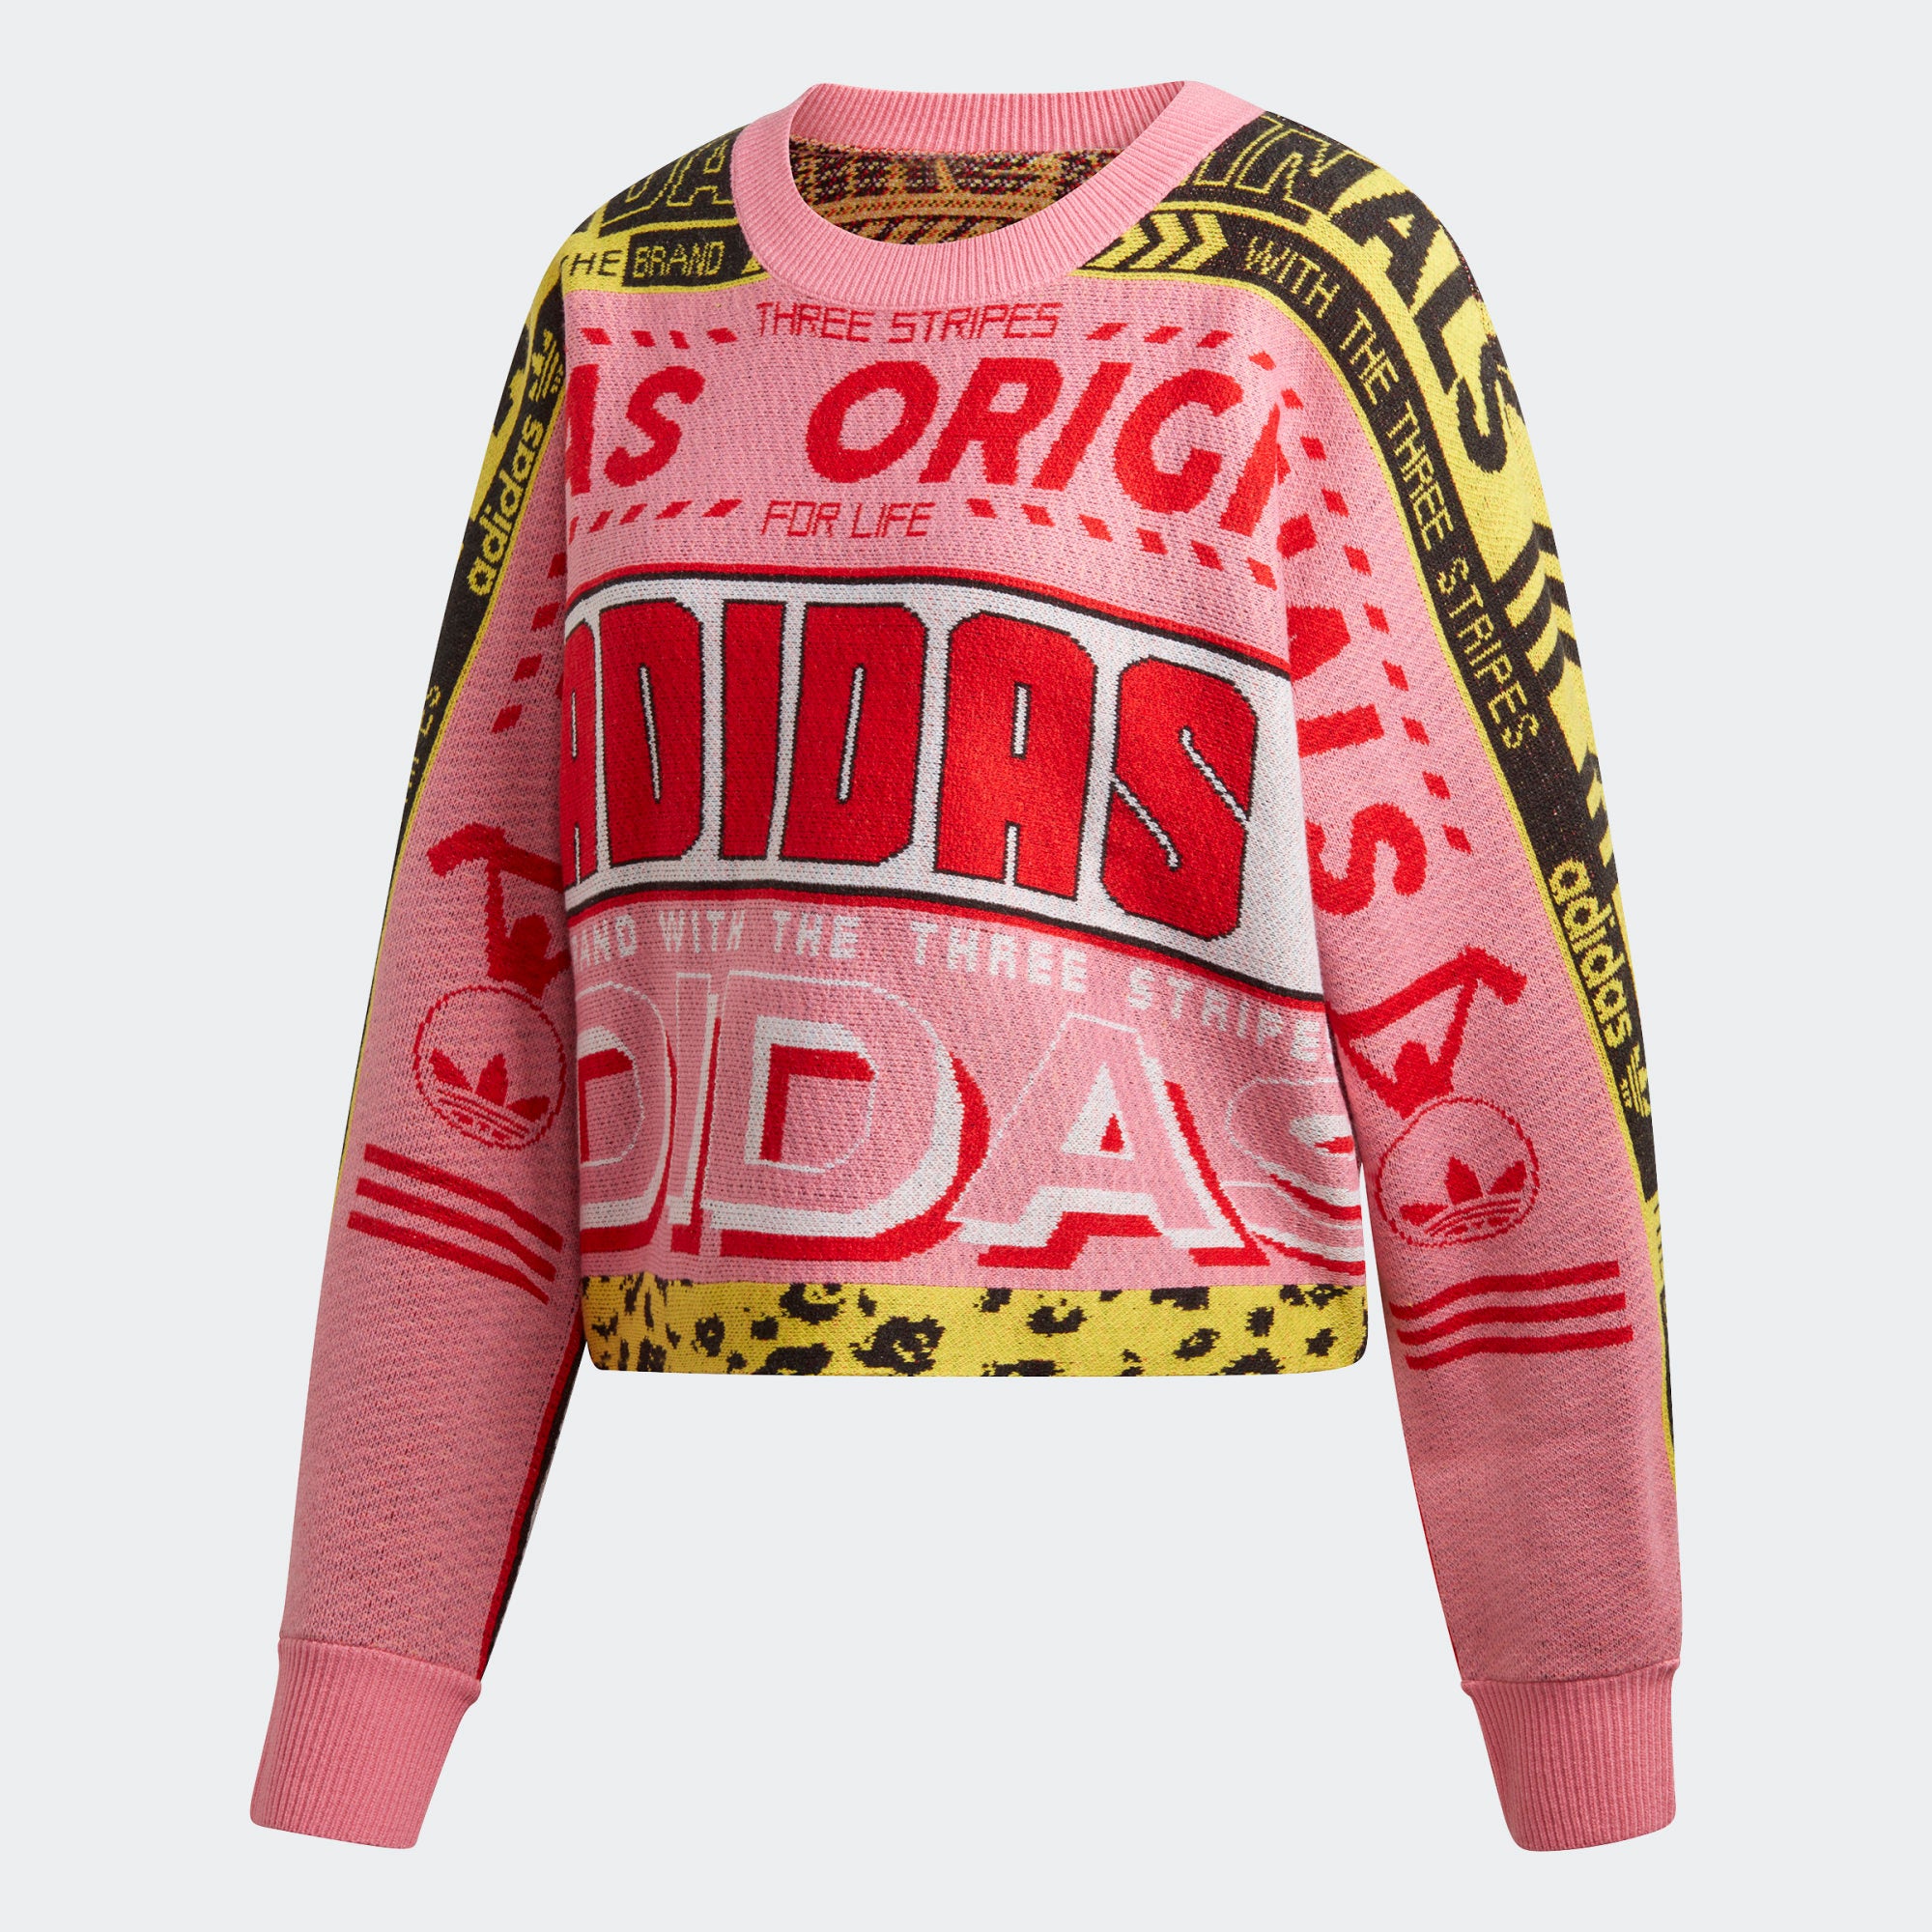 sweater adidas pink